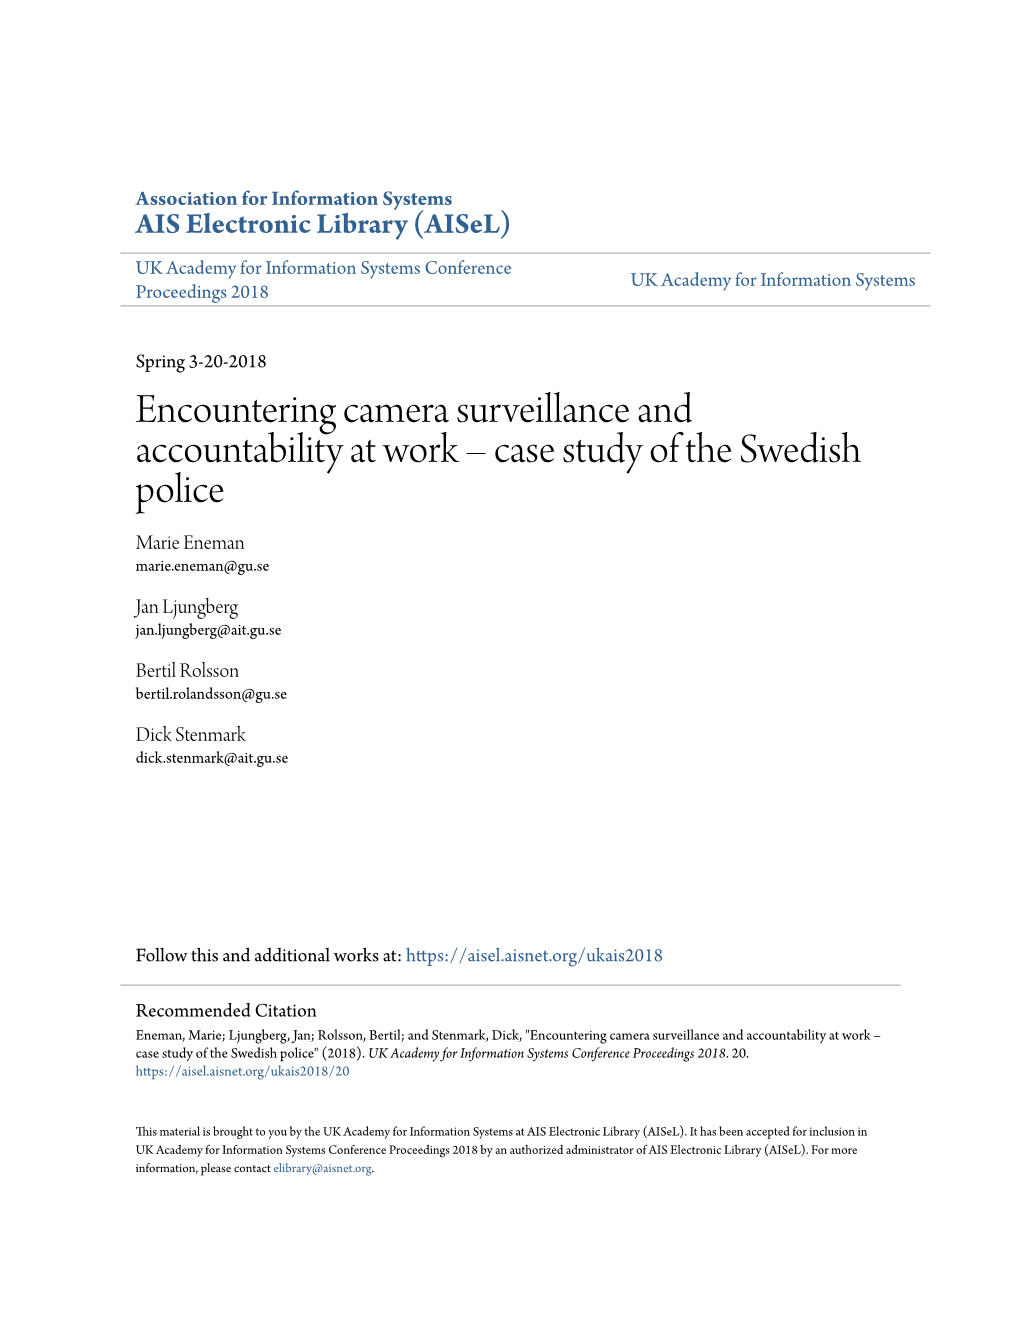 Encountering Camera Surveillance and Accountability at Work – Case Study of the Swedish Police Marie Eneman Marie.Eneman@Gu.Se